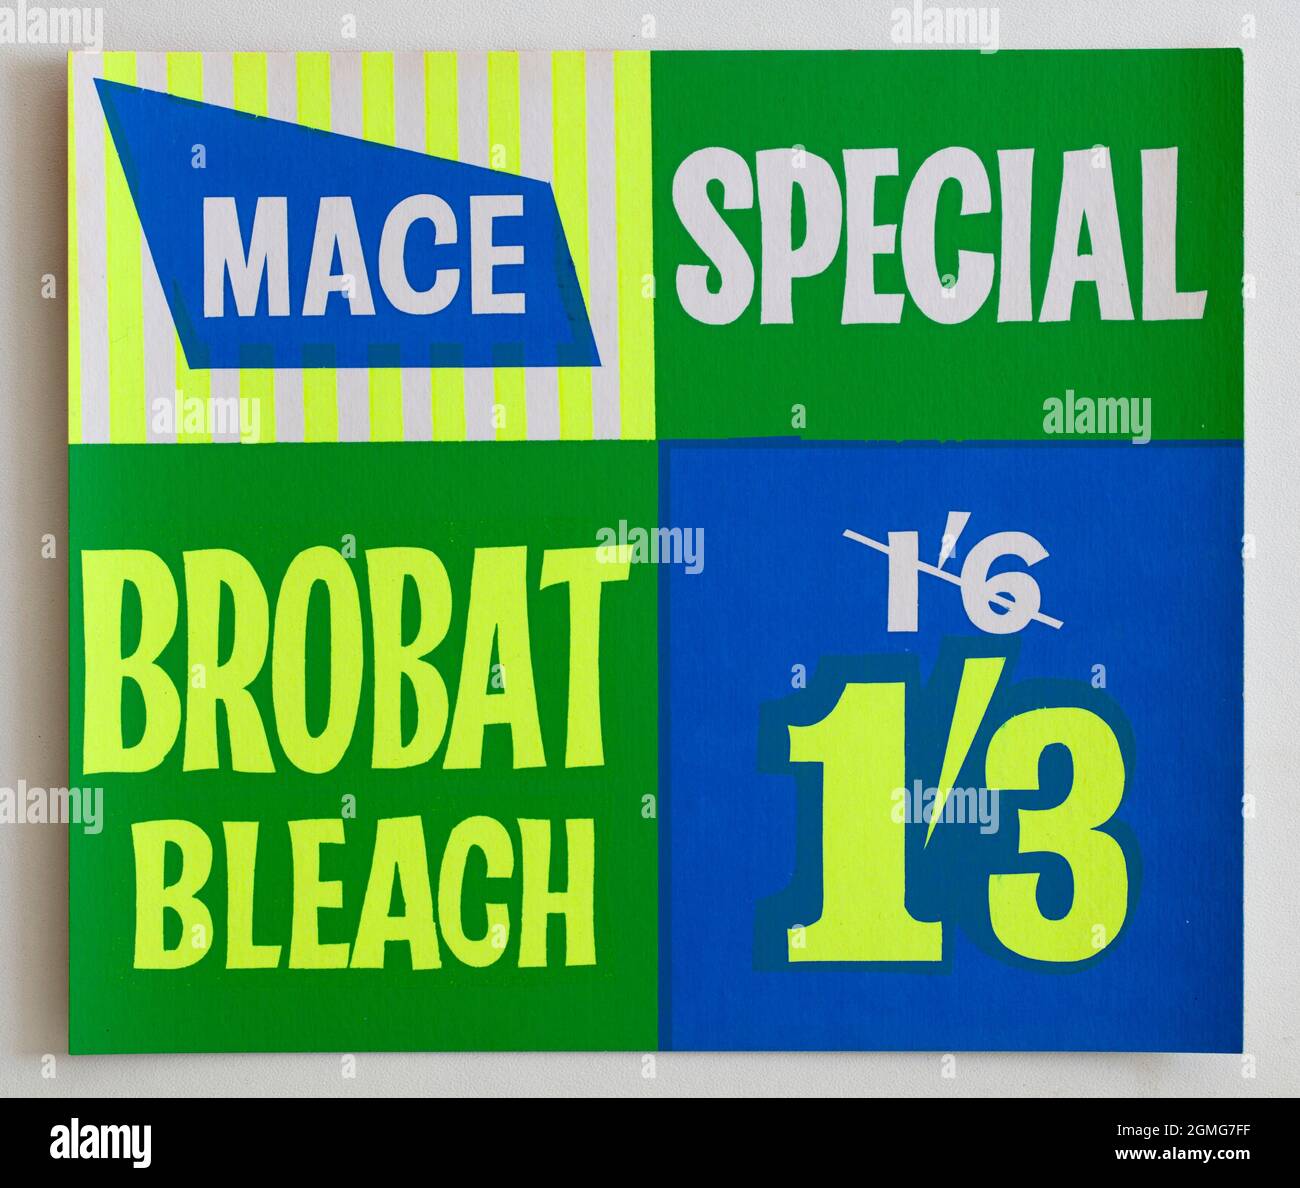 Vintage 1960s Mace Shop Price Display Card - Brobat Bleach Stock Photo